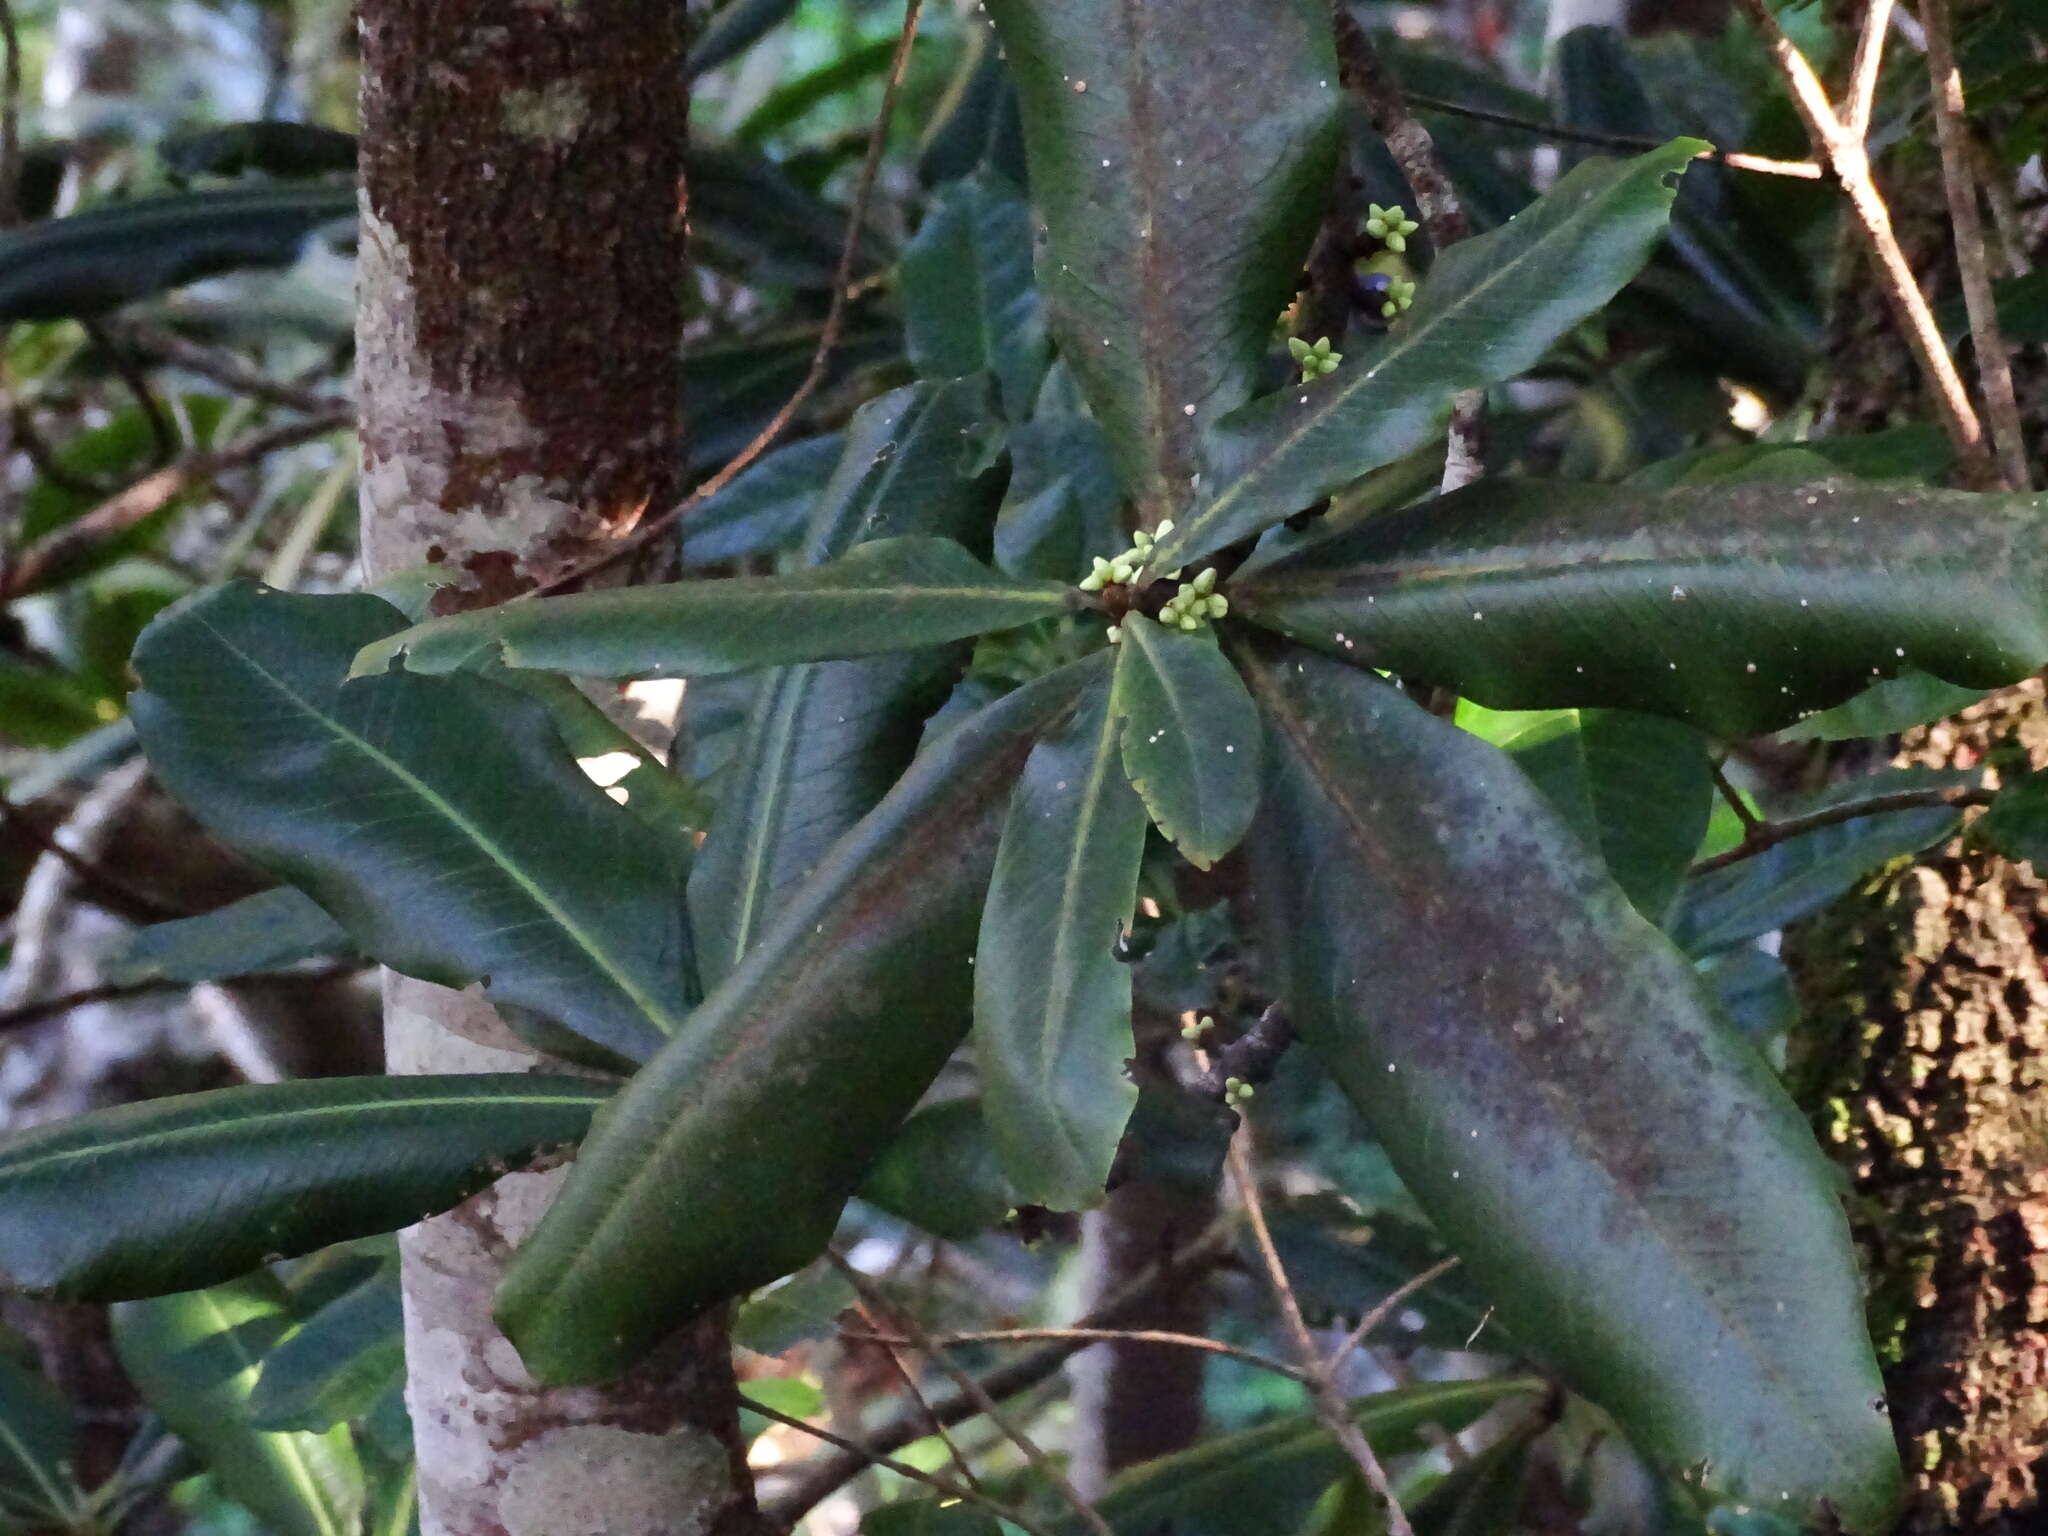 Image of Pleiomeris canariensis (Willd.) A. DC.